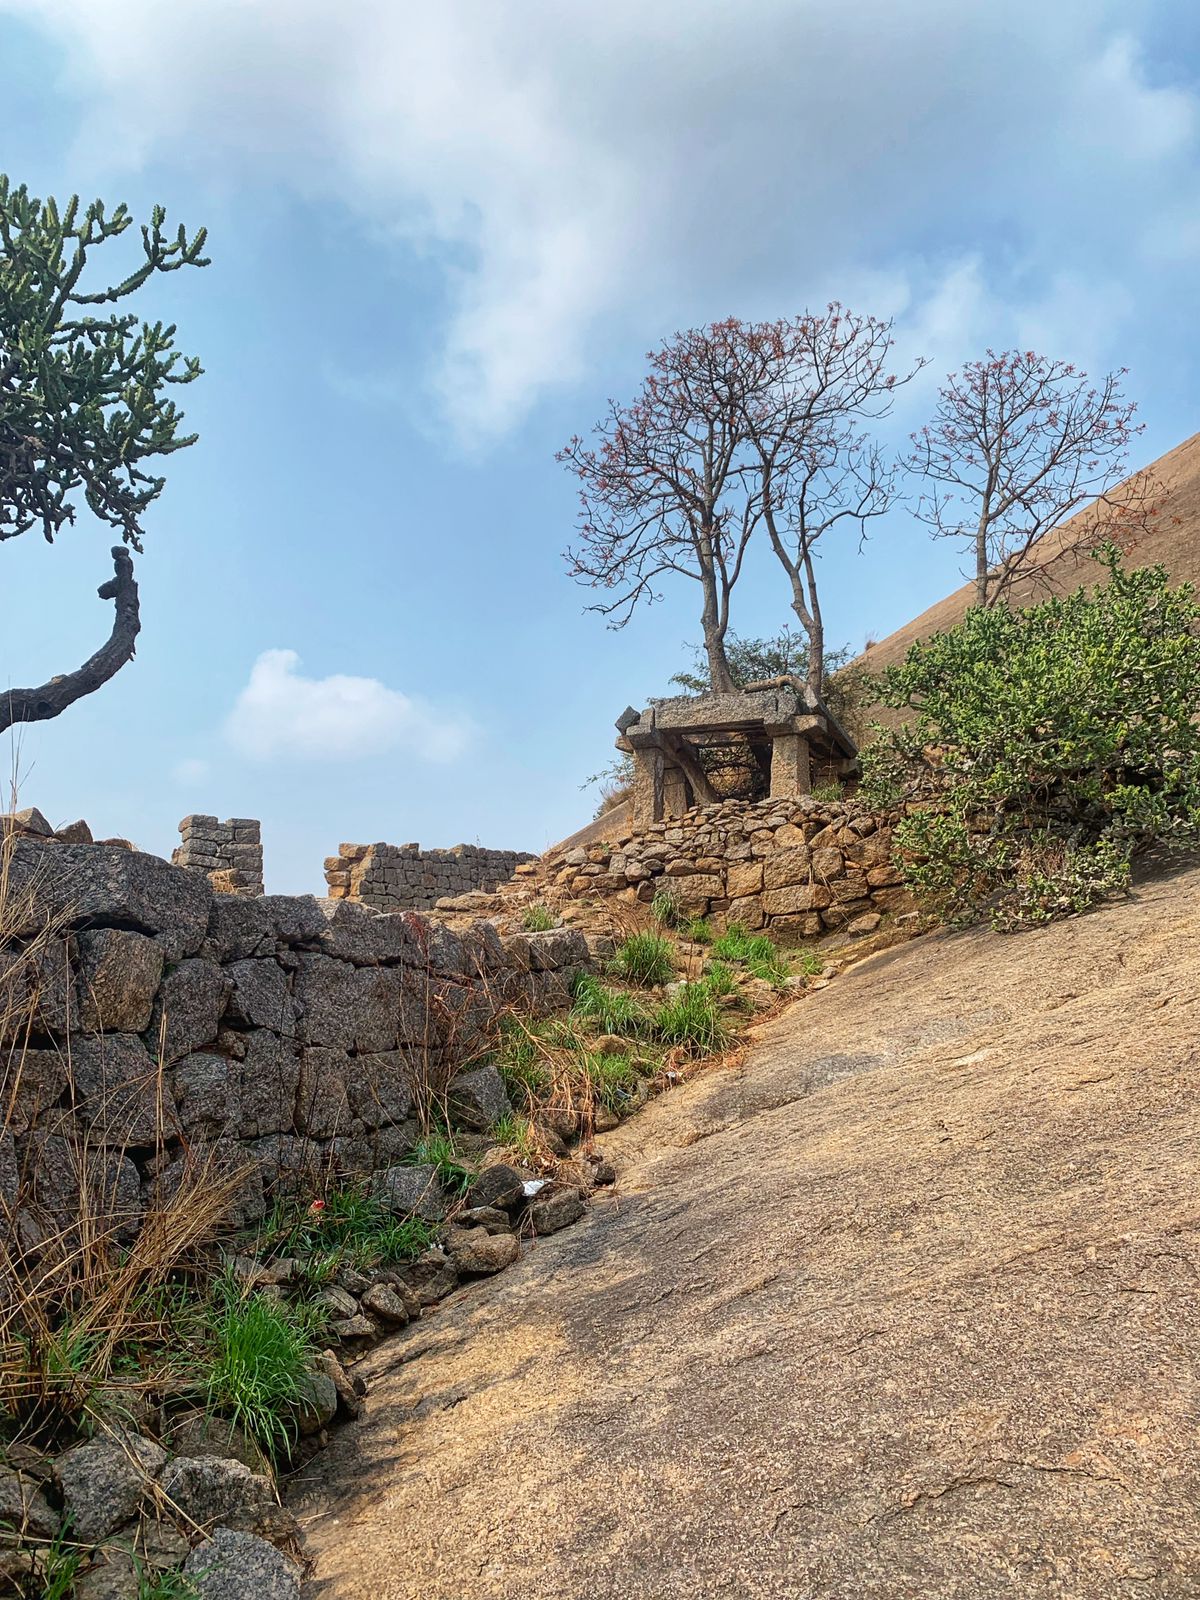 Fort Wall I - Savandurga trek